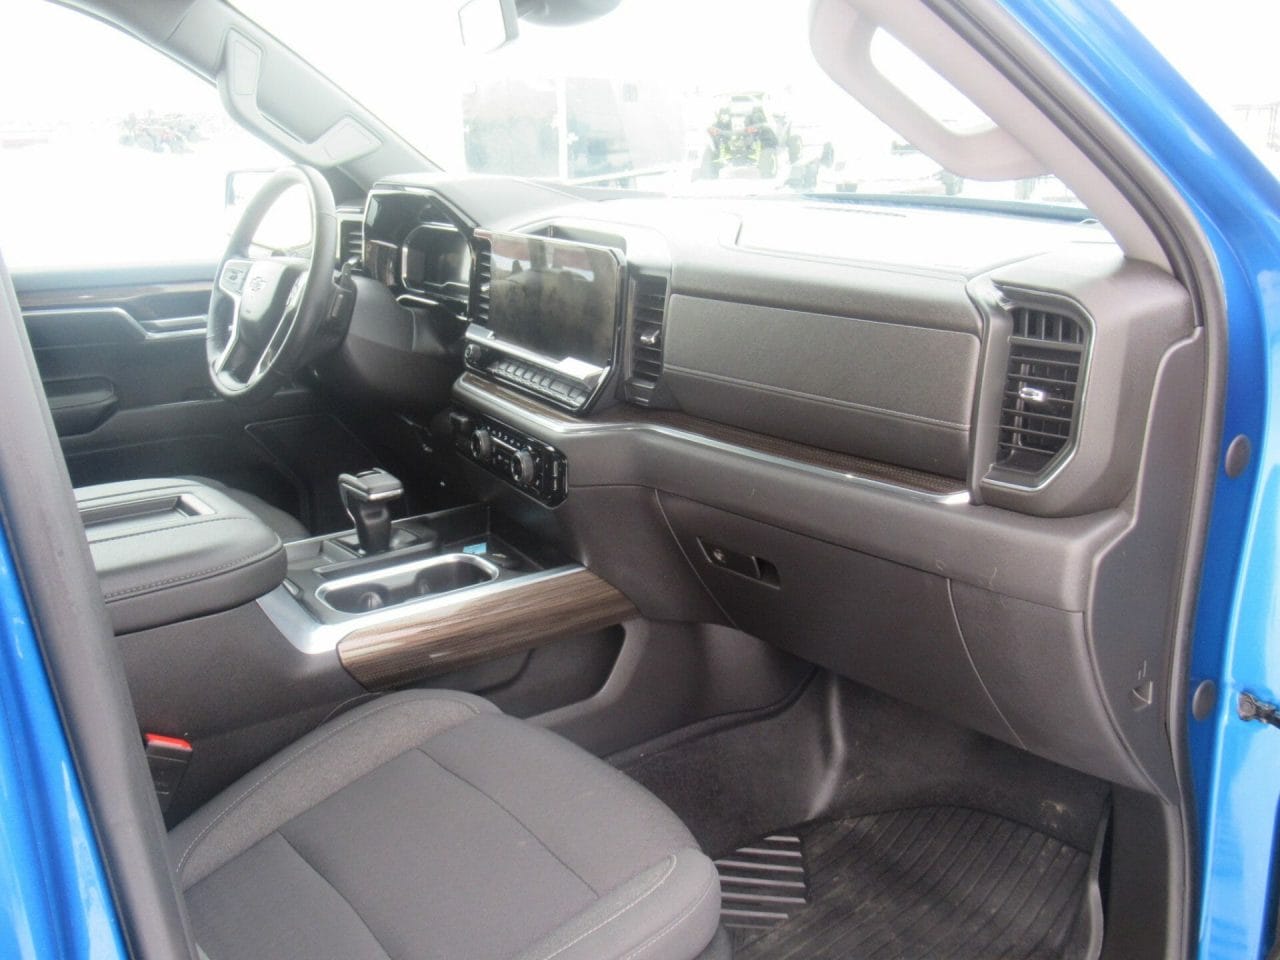 2022 Chevy Silverado 1500 RST Crew Cab Duramax 4×4 